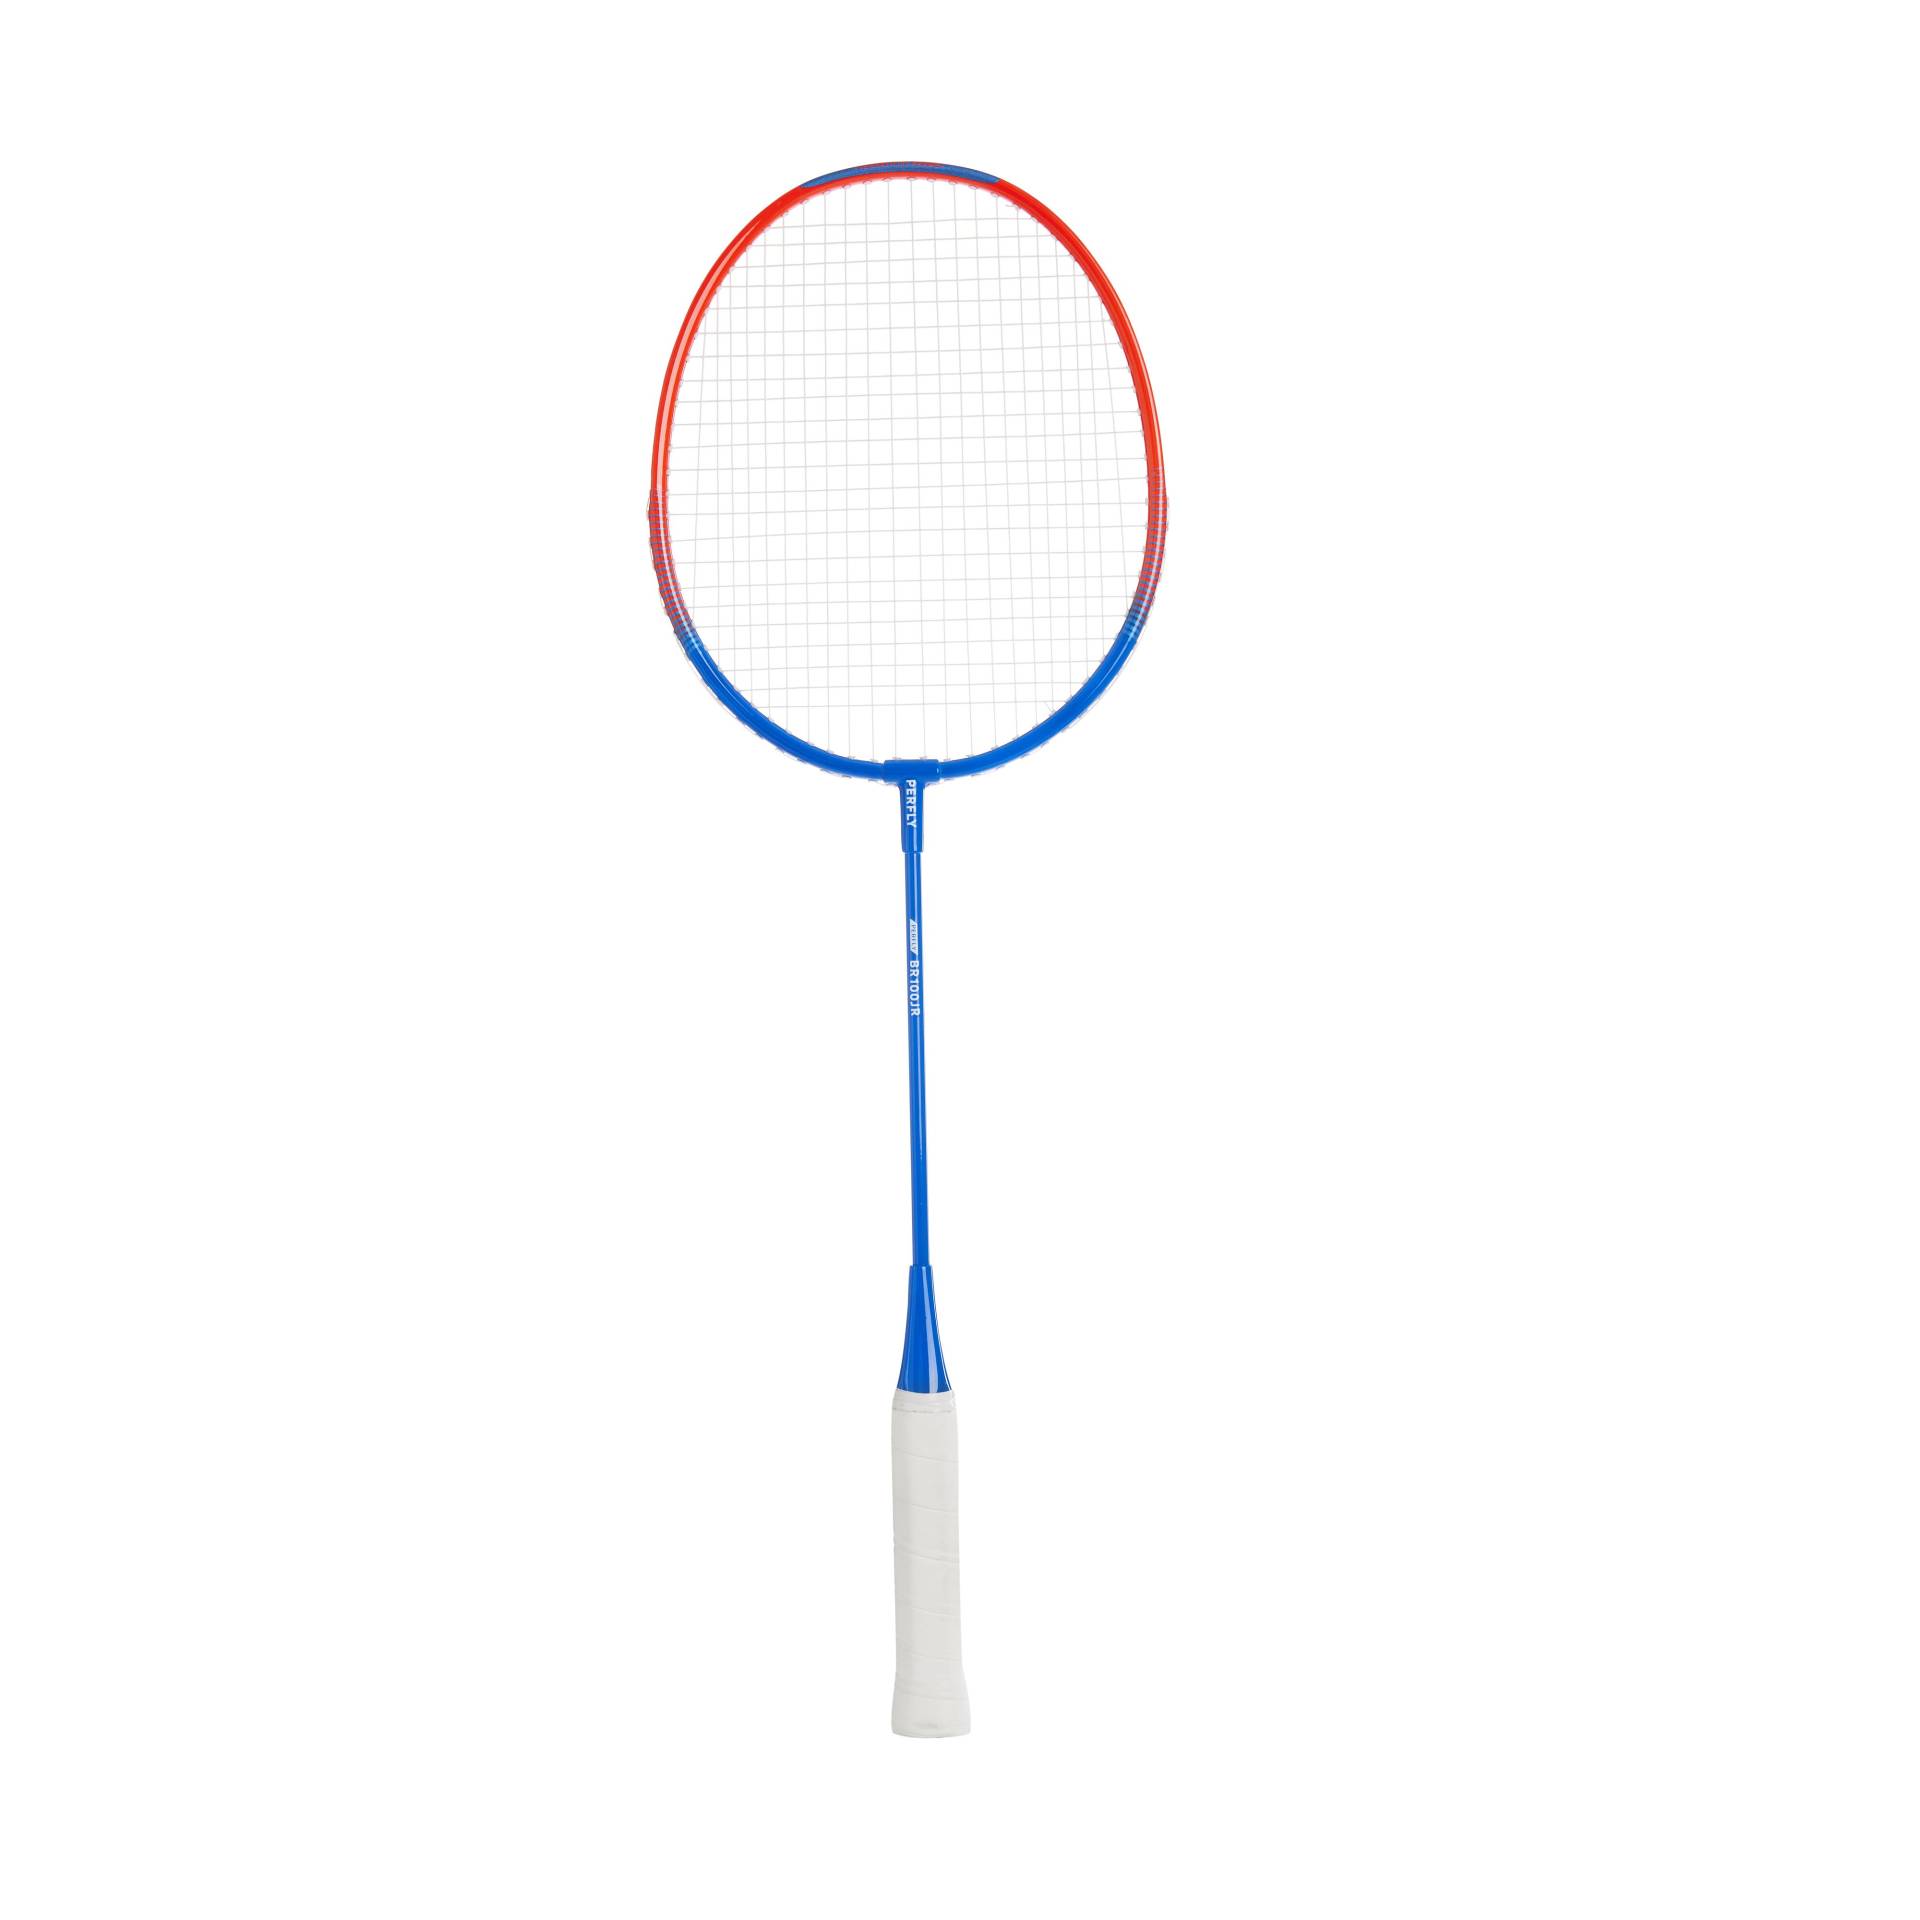 Badmintonschläger Kinder 90 g Aluminium - BR100 blau/rot von PERFLY